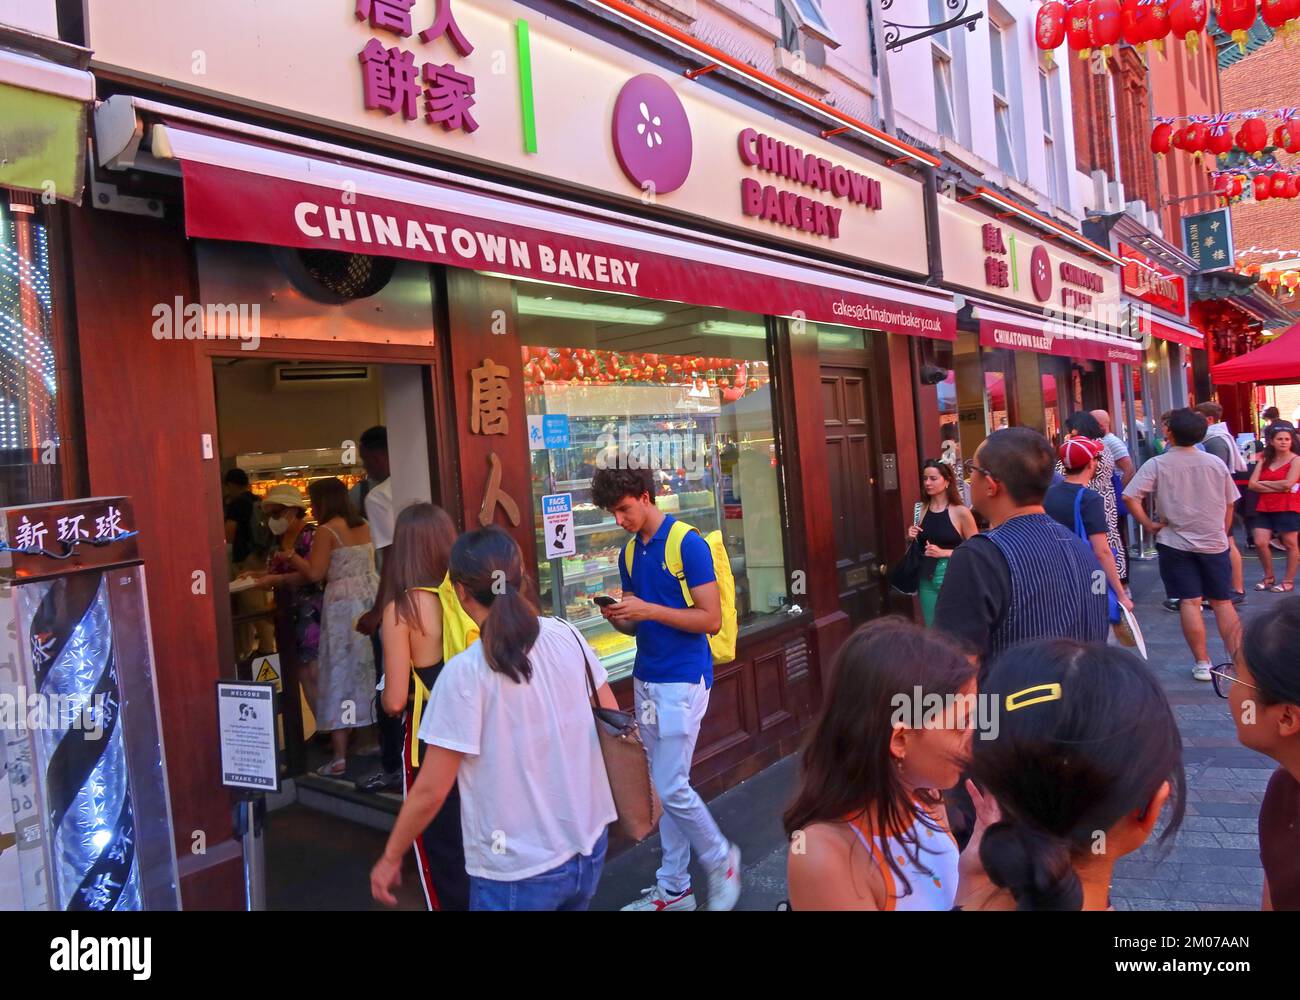 Chinatown Bakery, Gerrard St, SOHO, London, England, UK, W1D 5PT Stockfoto